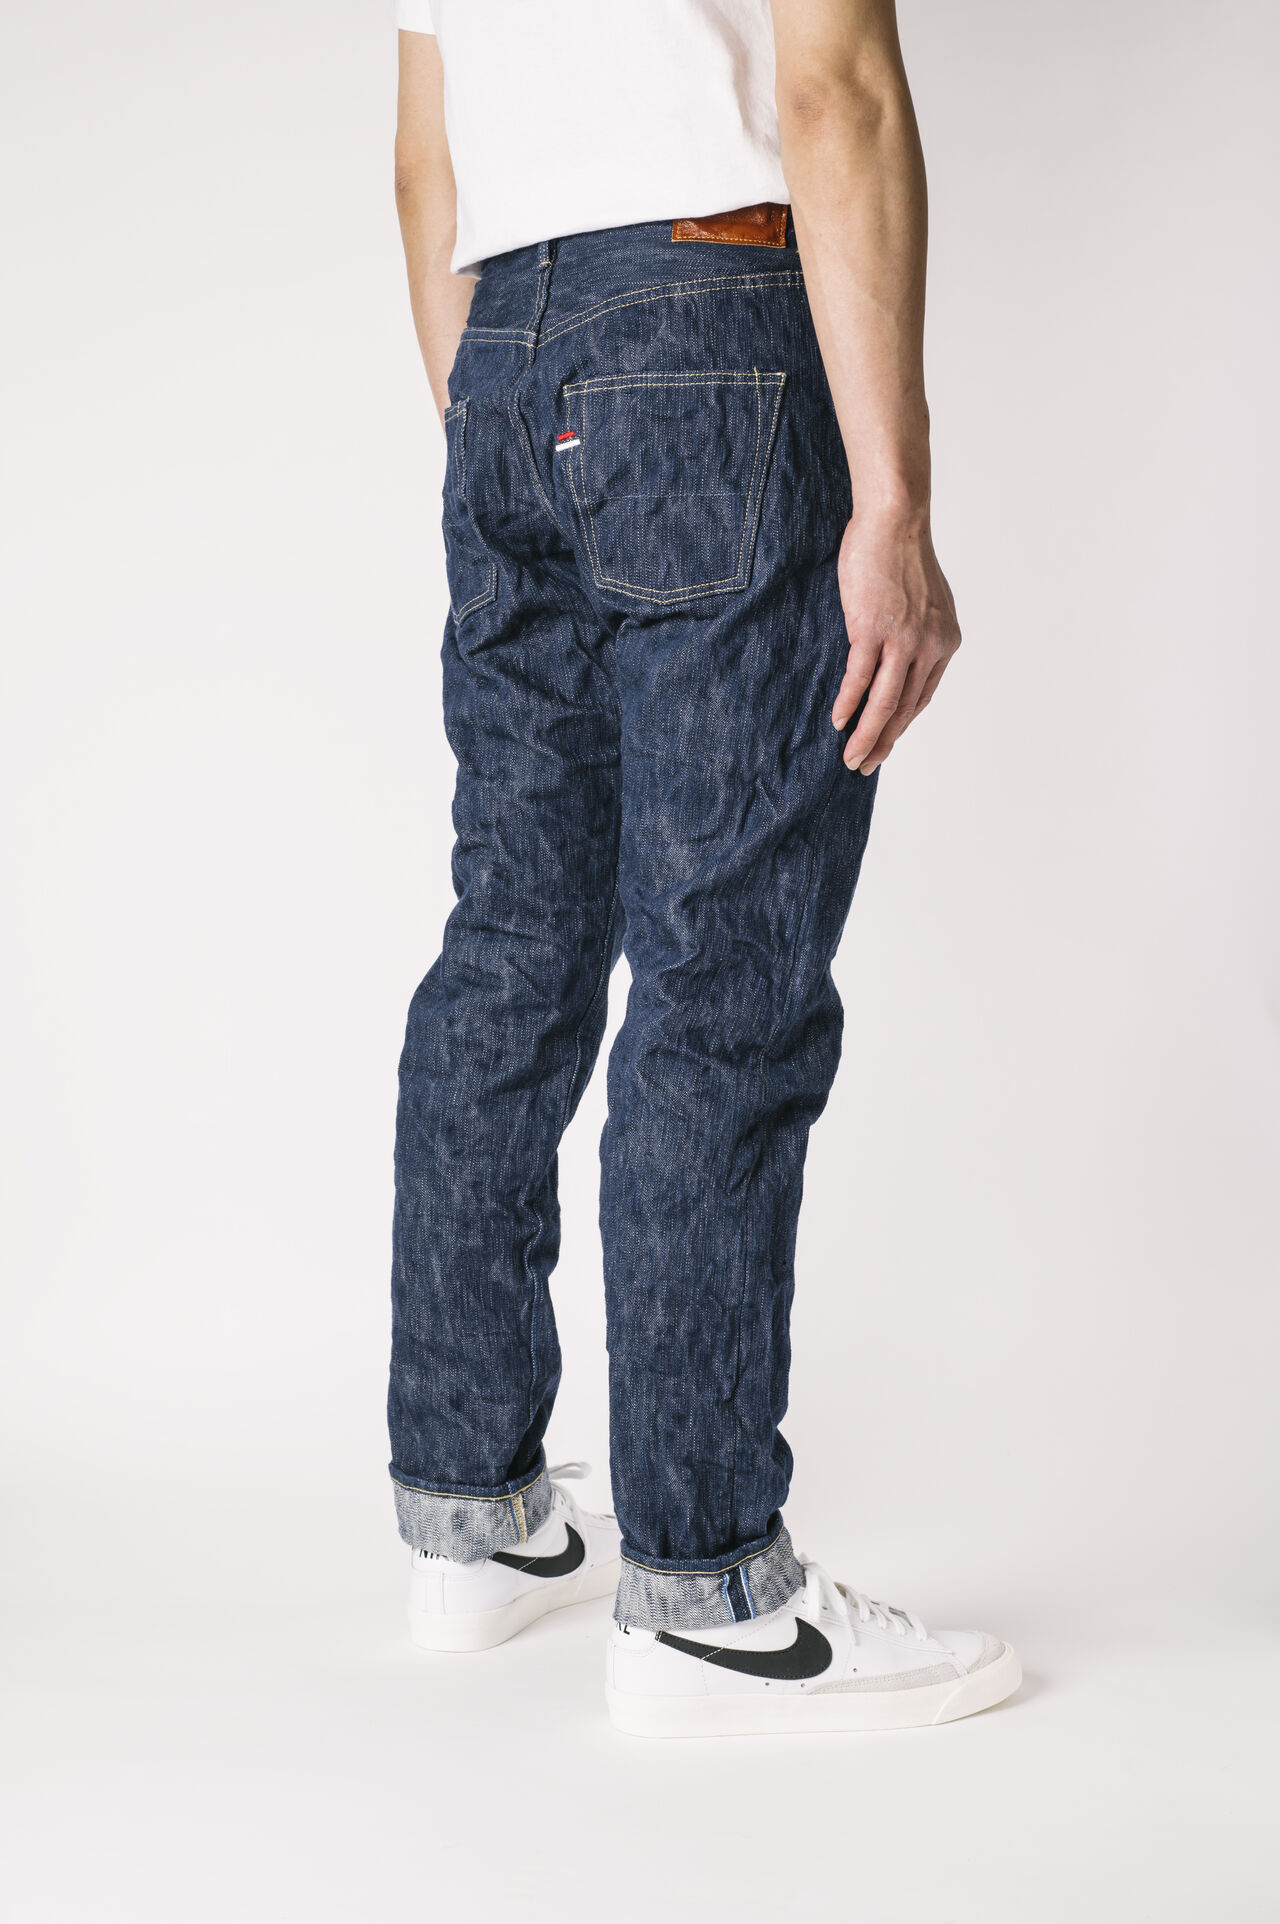 AHT 18oz Shoai "Arashi" High Tapered Jeans,, large image number 4